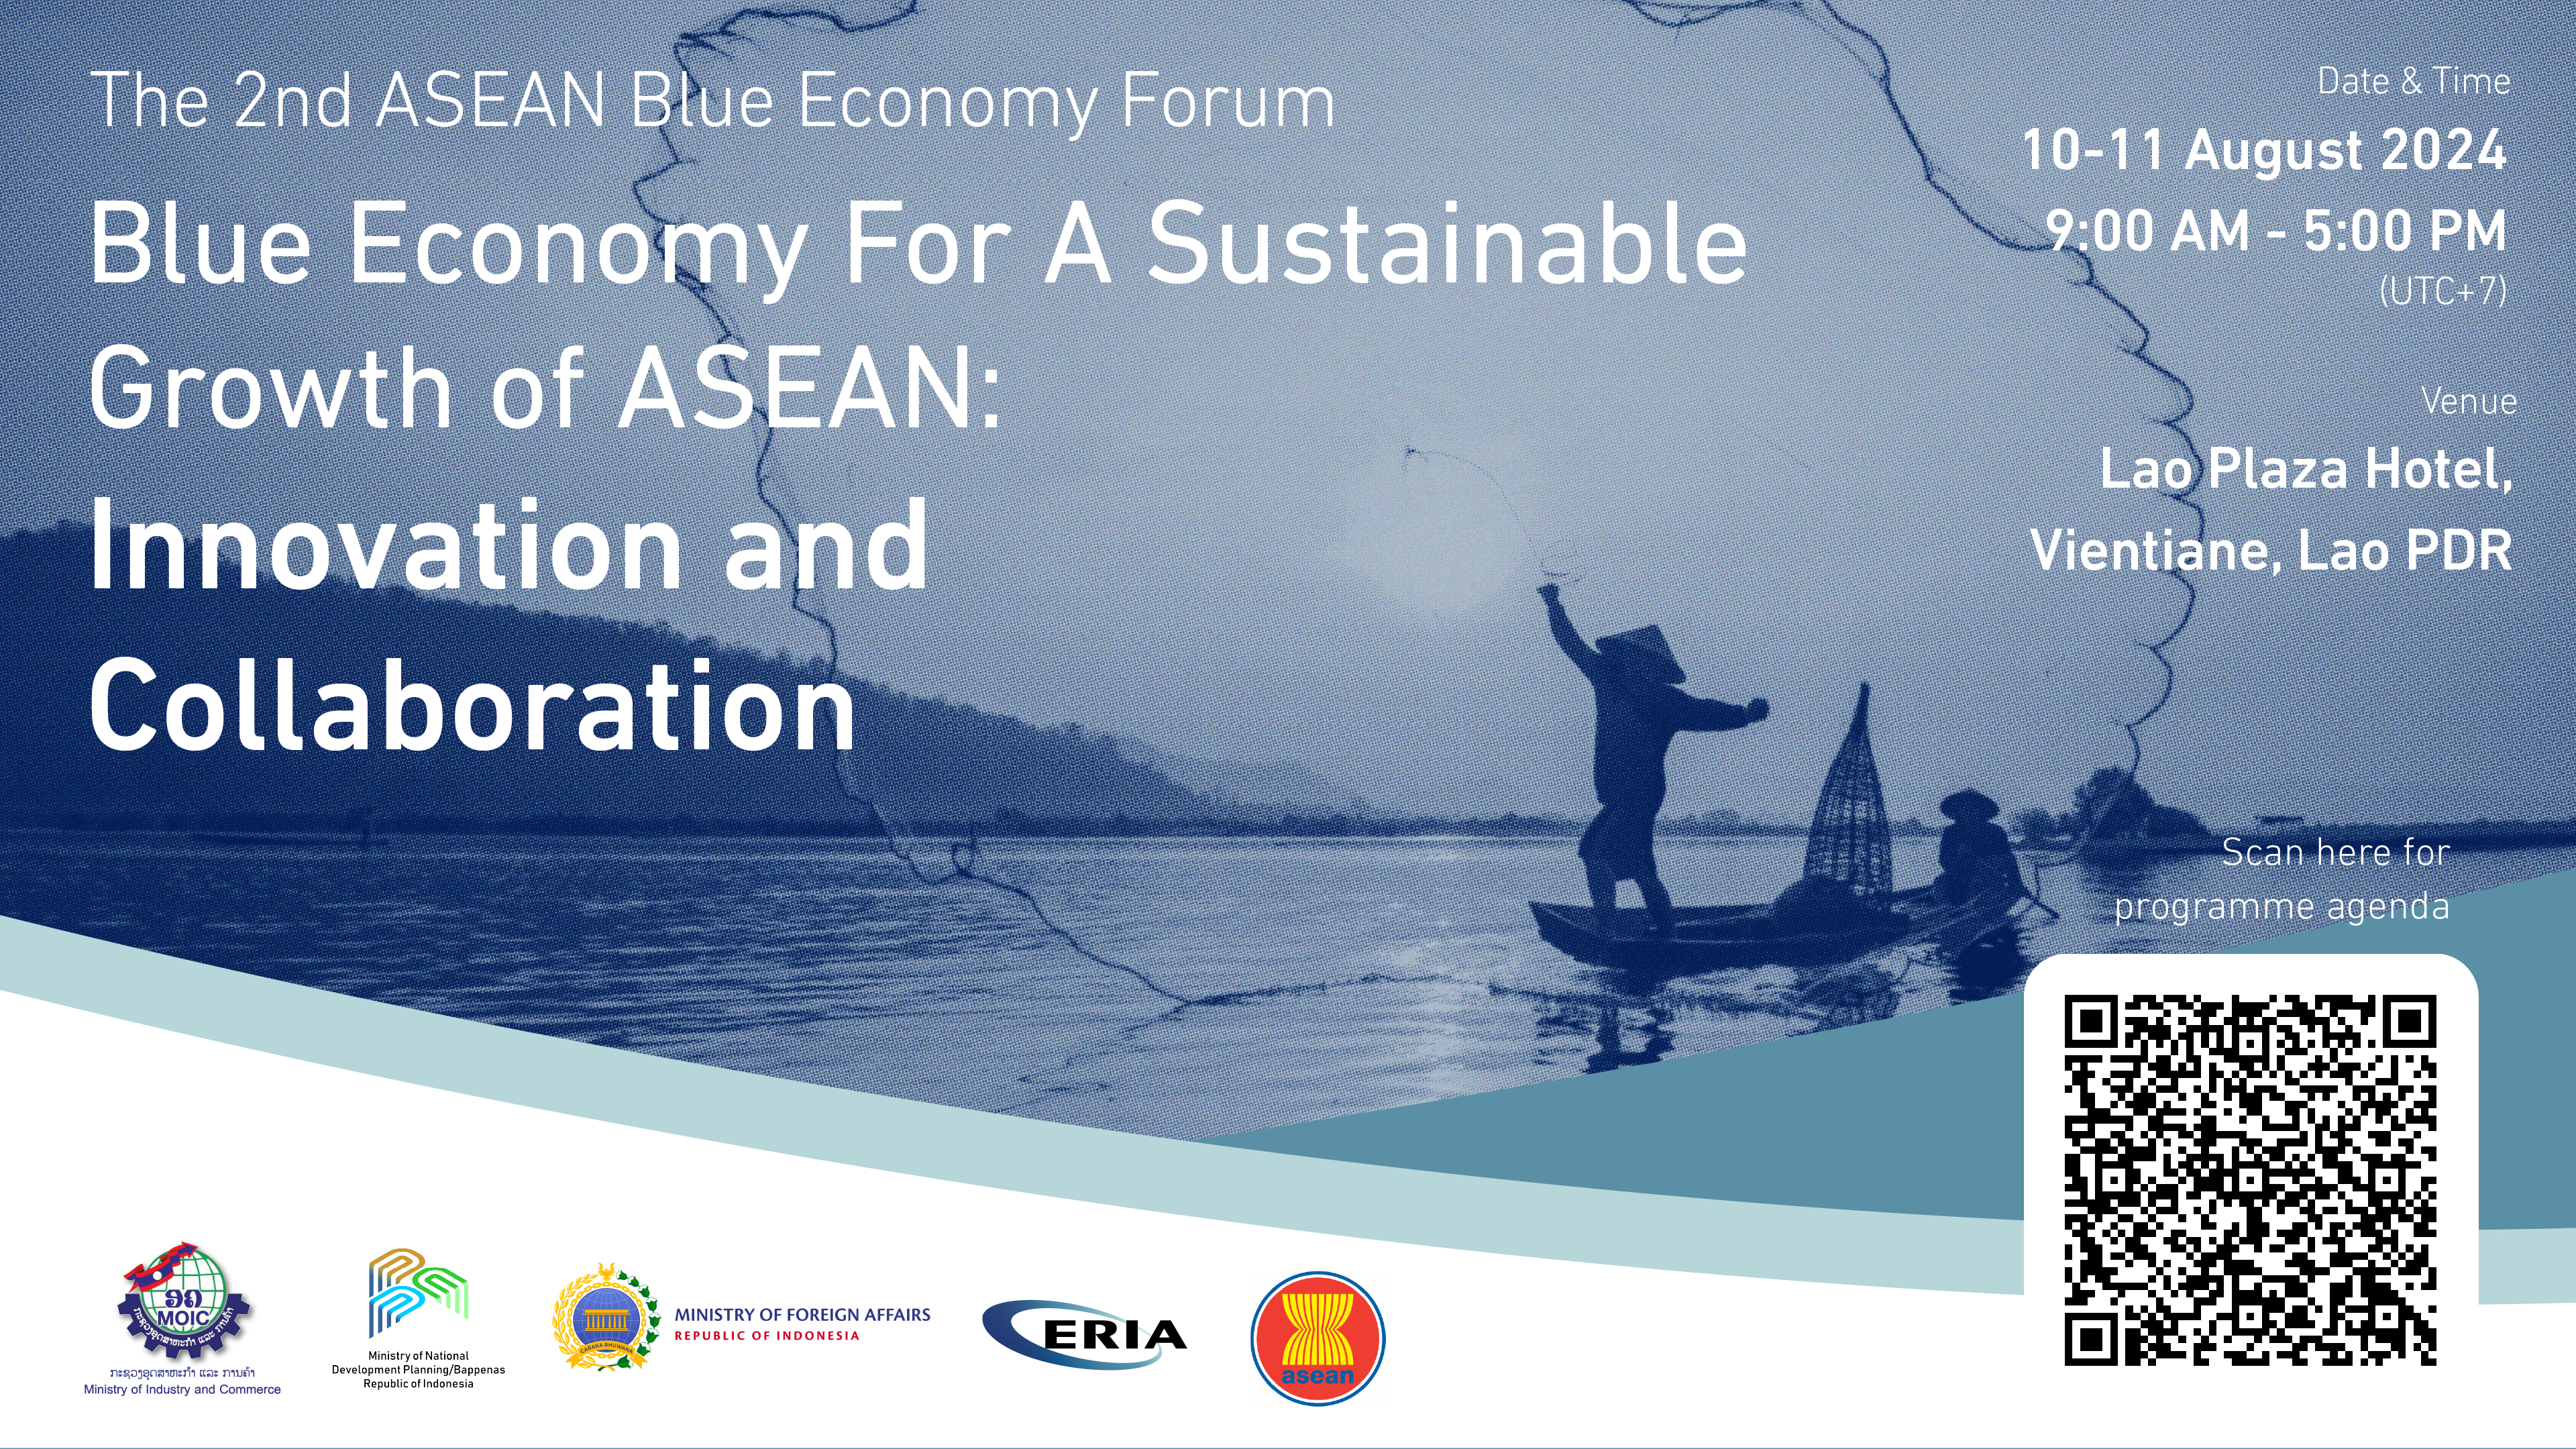 The Second ASEAN Blue Economy Forum